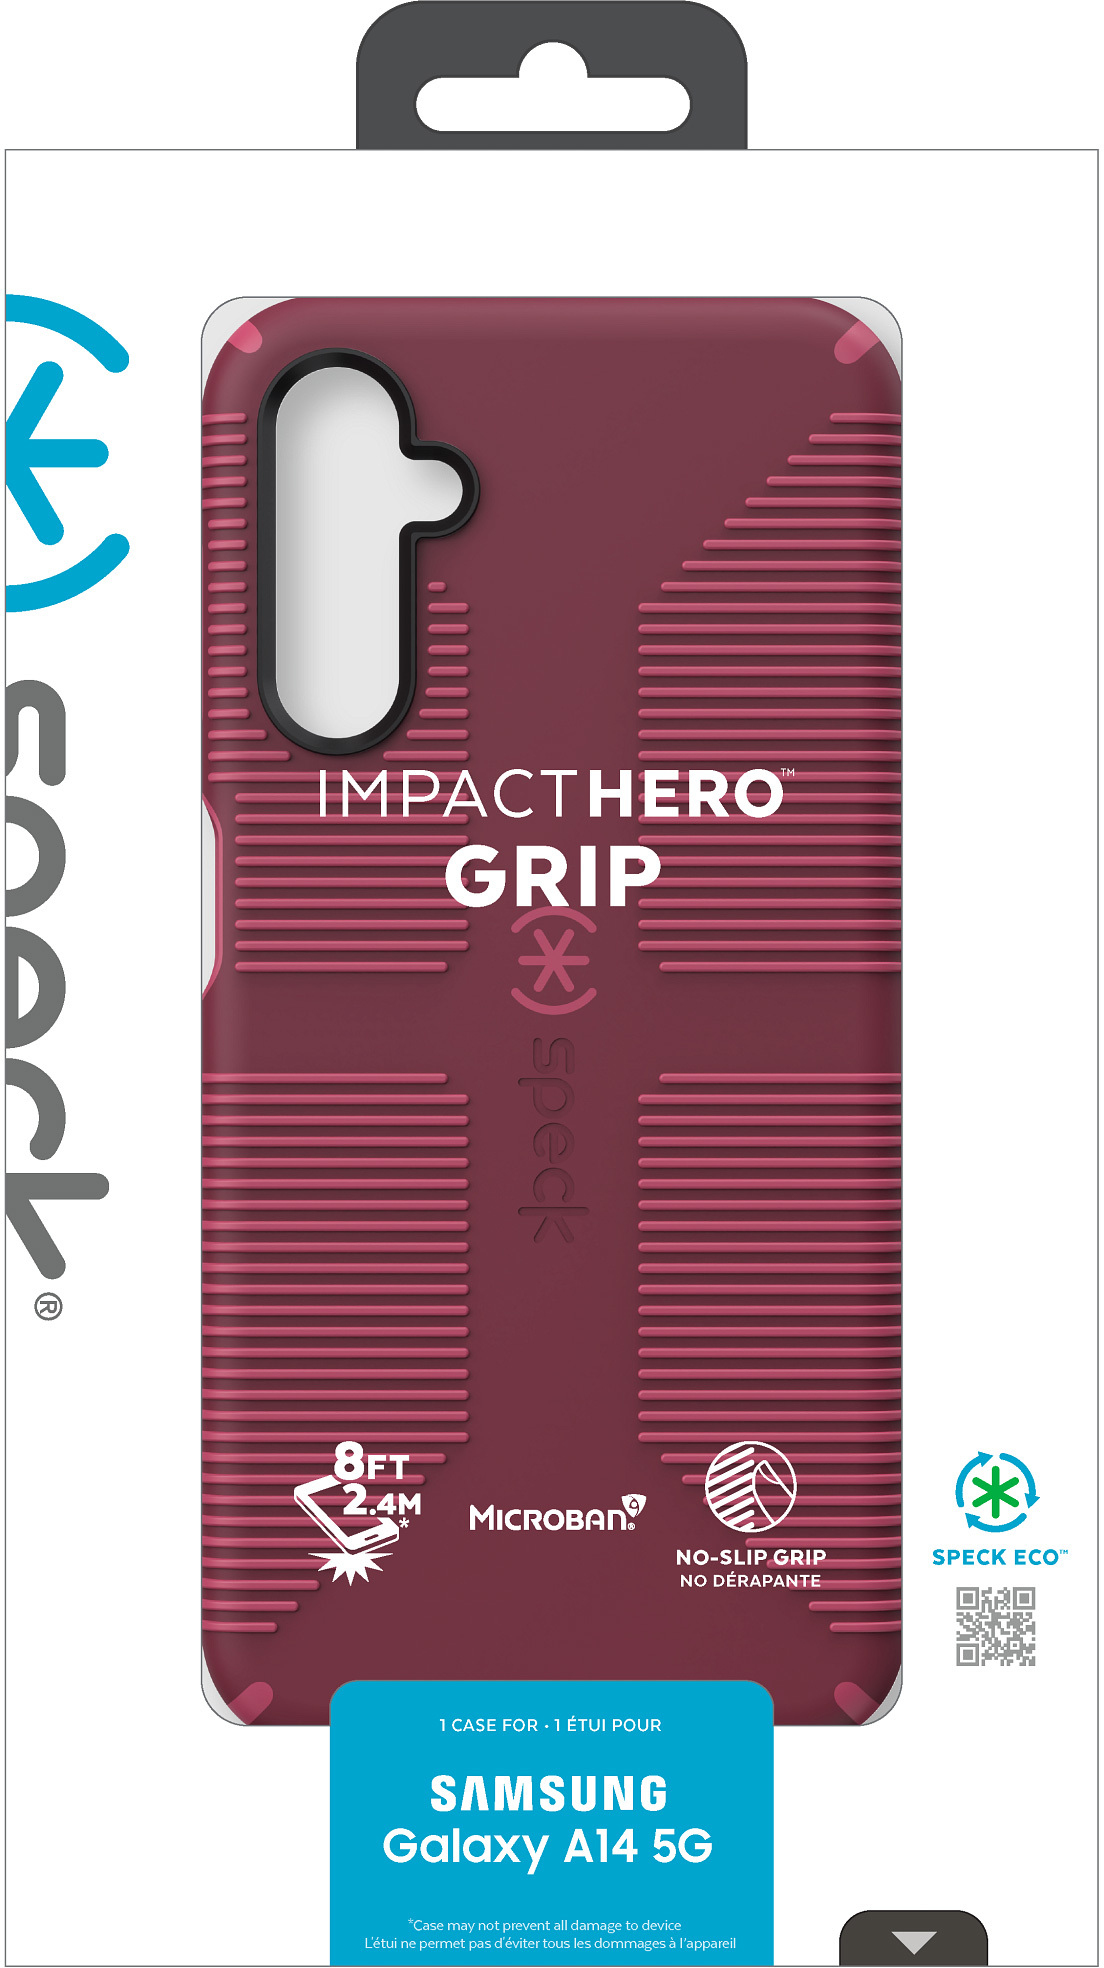 Tas SPECK Impact Hero Grip Samsung Galaxy A14 Rusty Red